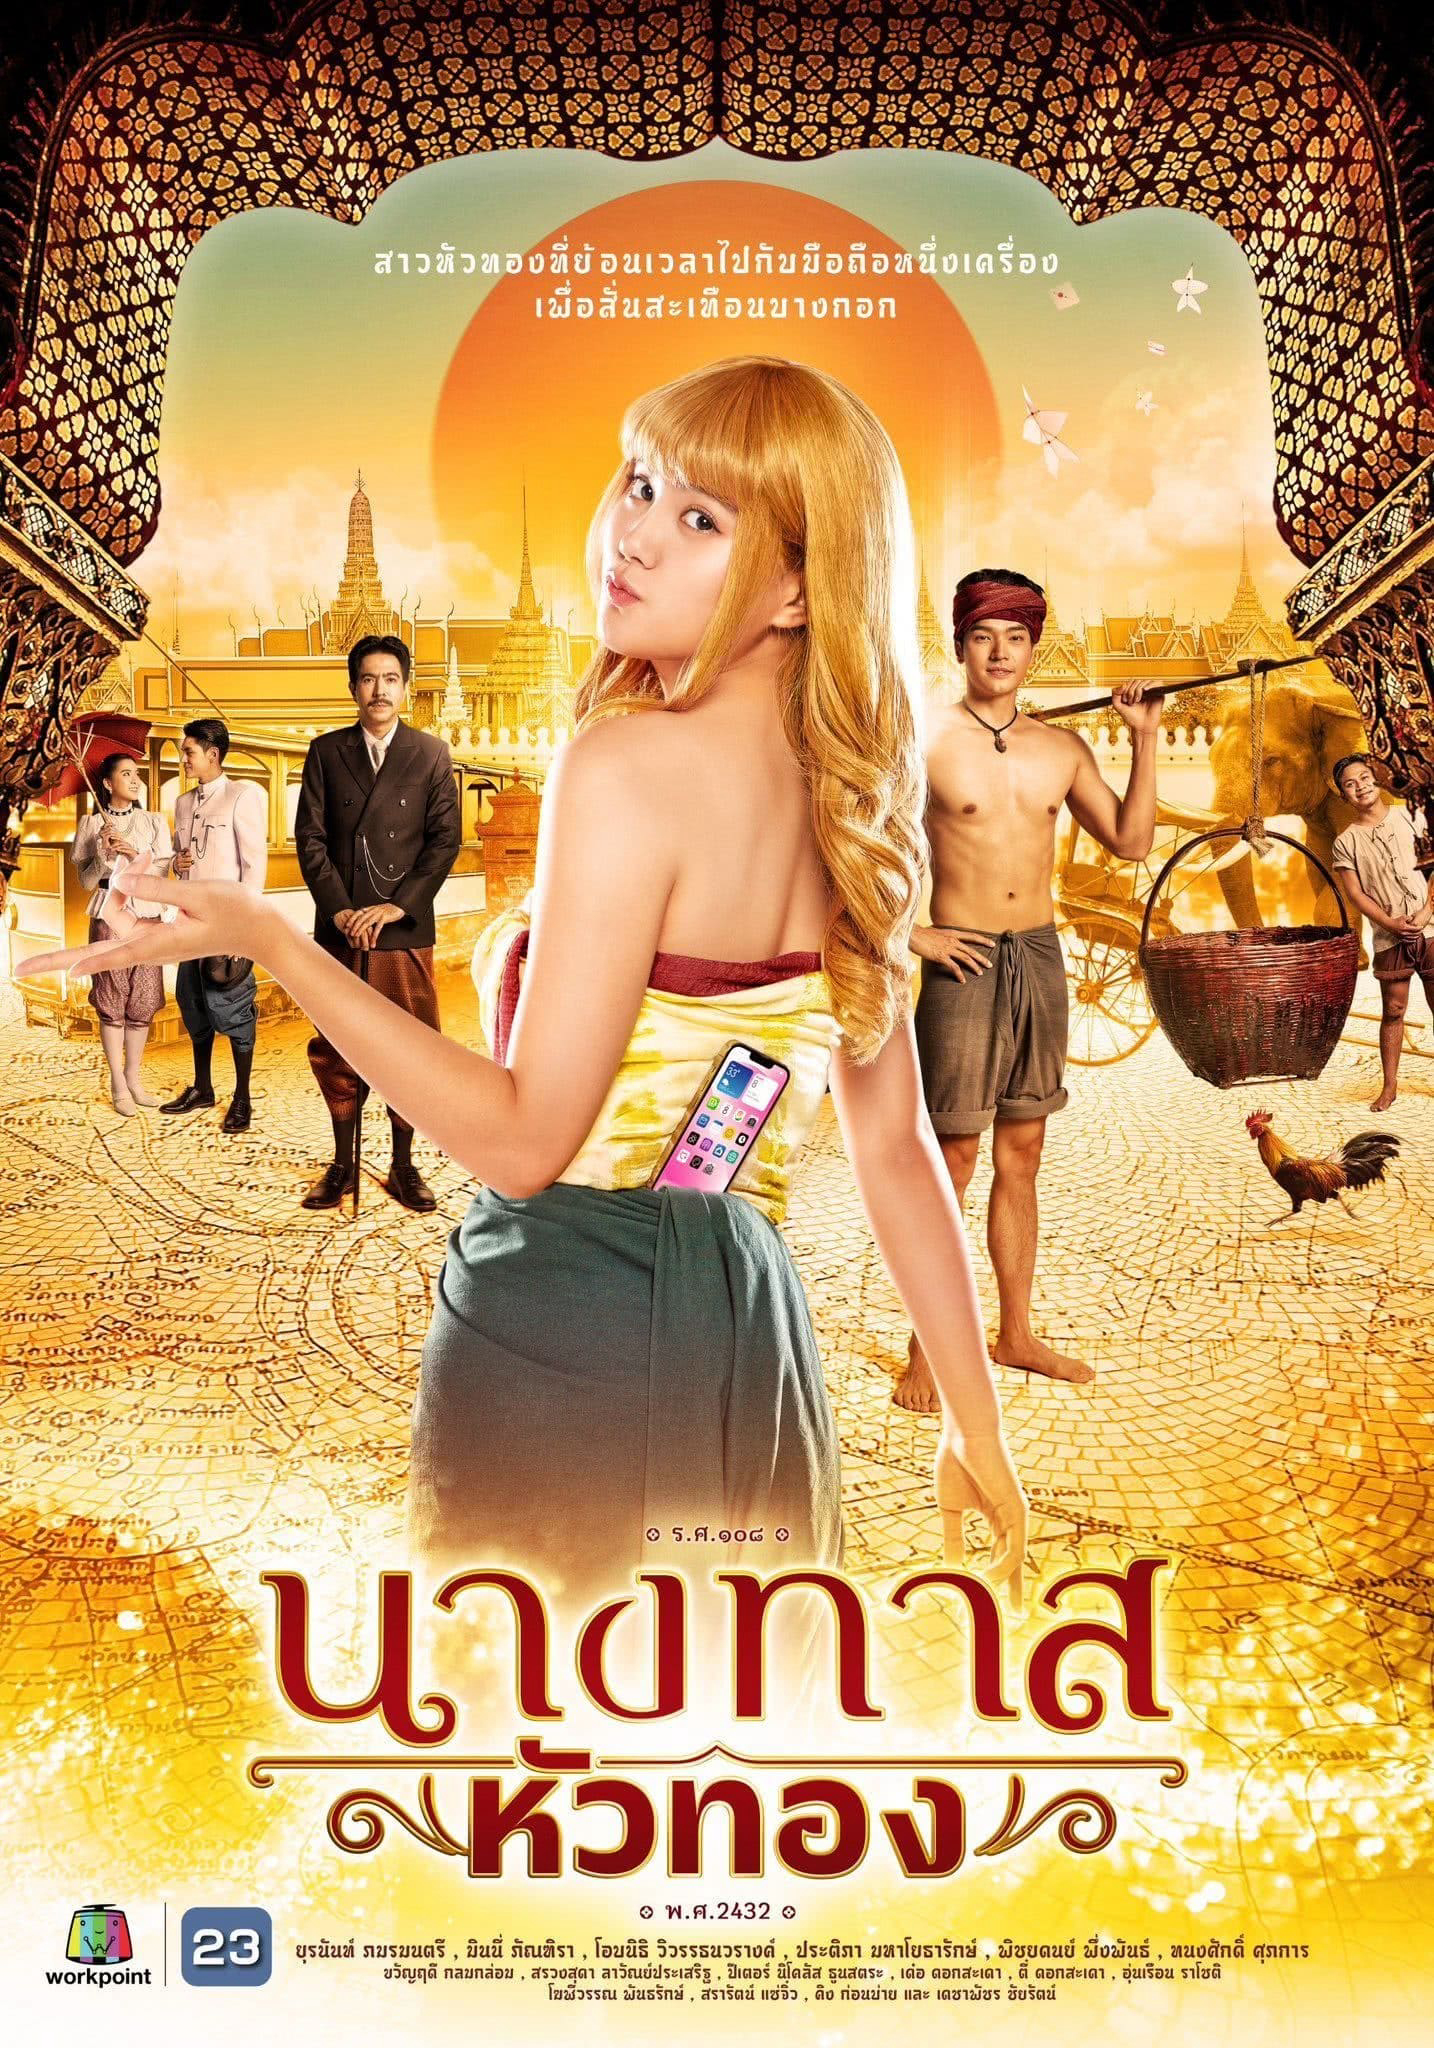 Poster Phim Vàng Hoe Ở Thời Xưa (Blondie in an Ancient Time)